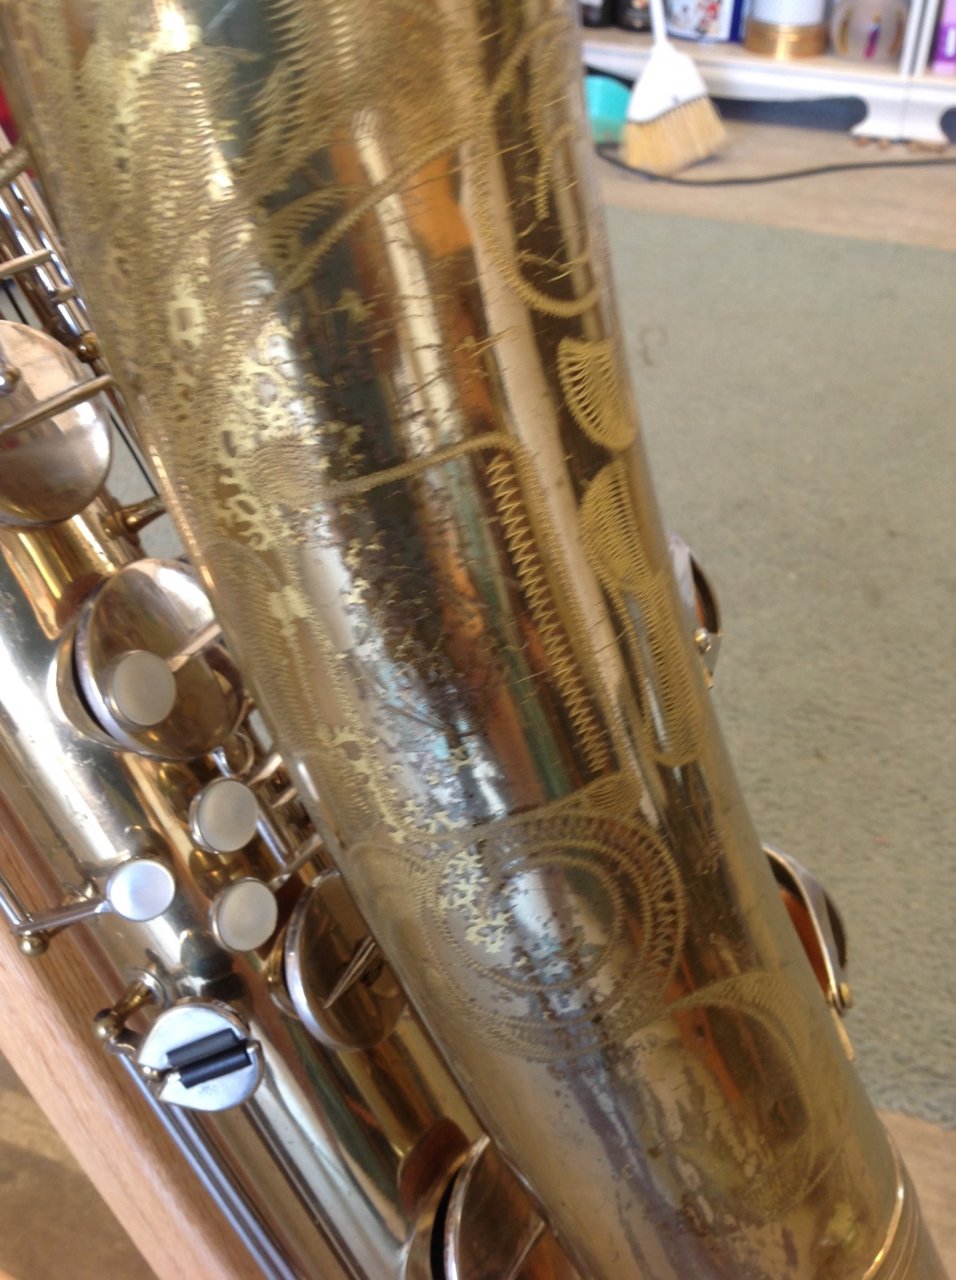 serial number saxophone yamaha